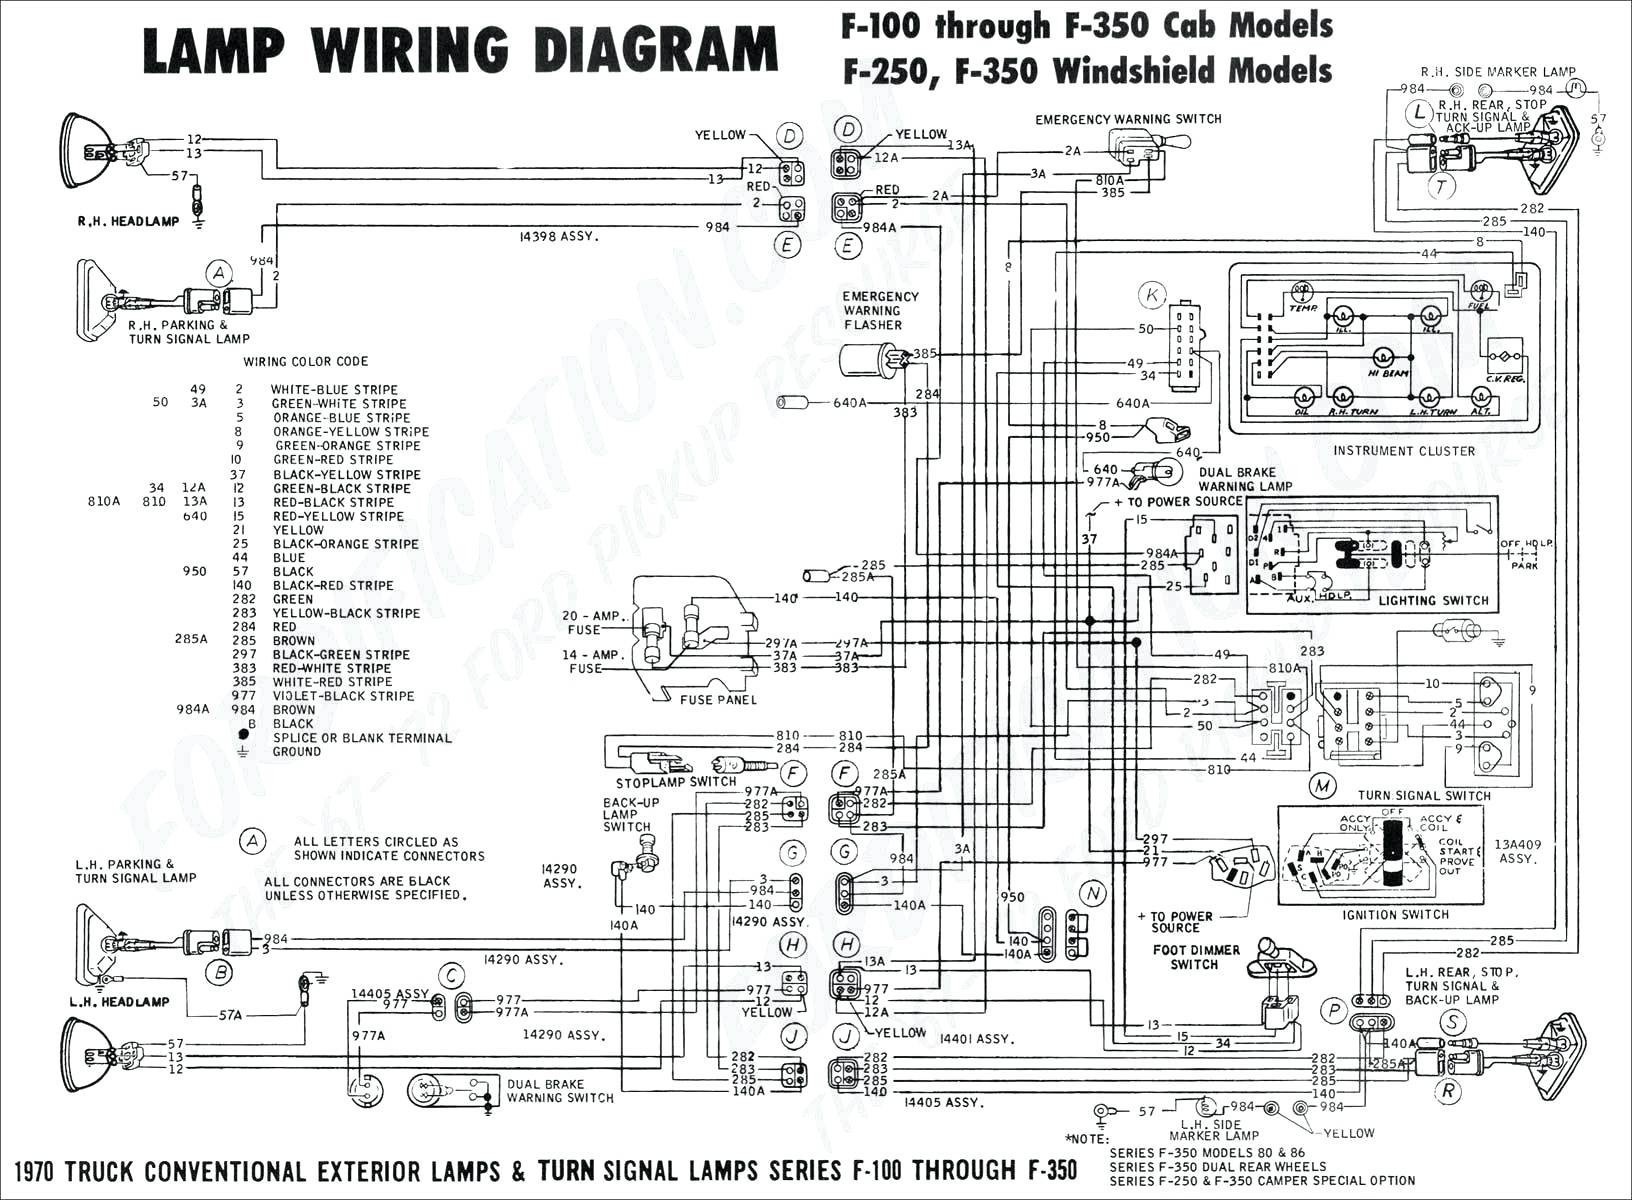 1995 Acura Integra Engine Diagram 4f2045 Manow Ns2 Name Wiring Diagram for 2012 Morgan Of 1995 Acura Integra Engine Diagram